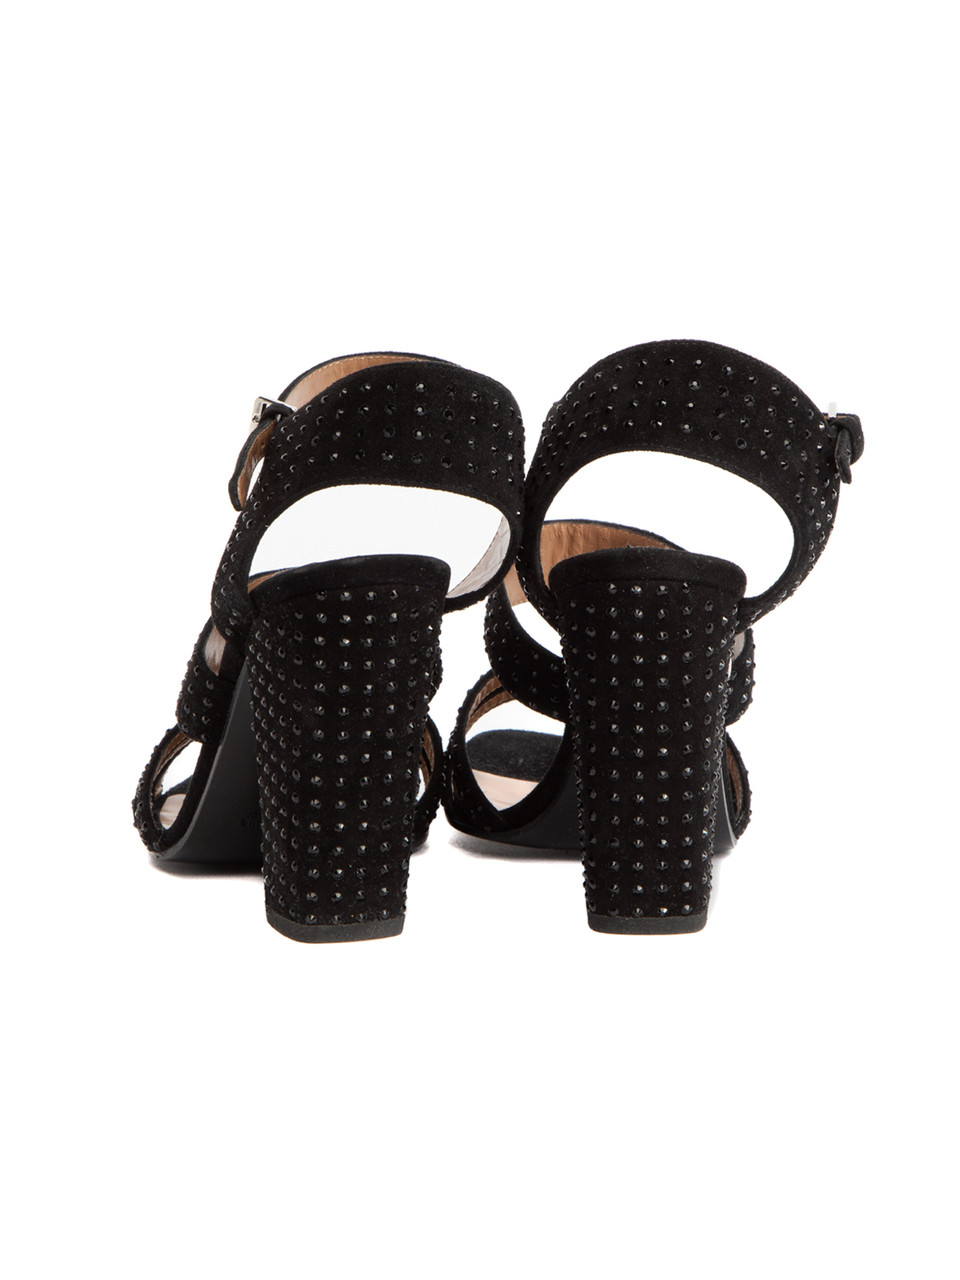 Laurence Dacade Strappy Embellished Sandal Block Heels